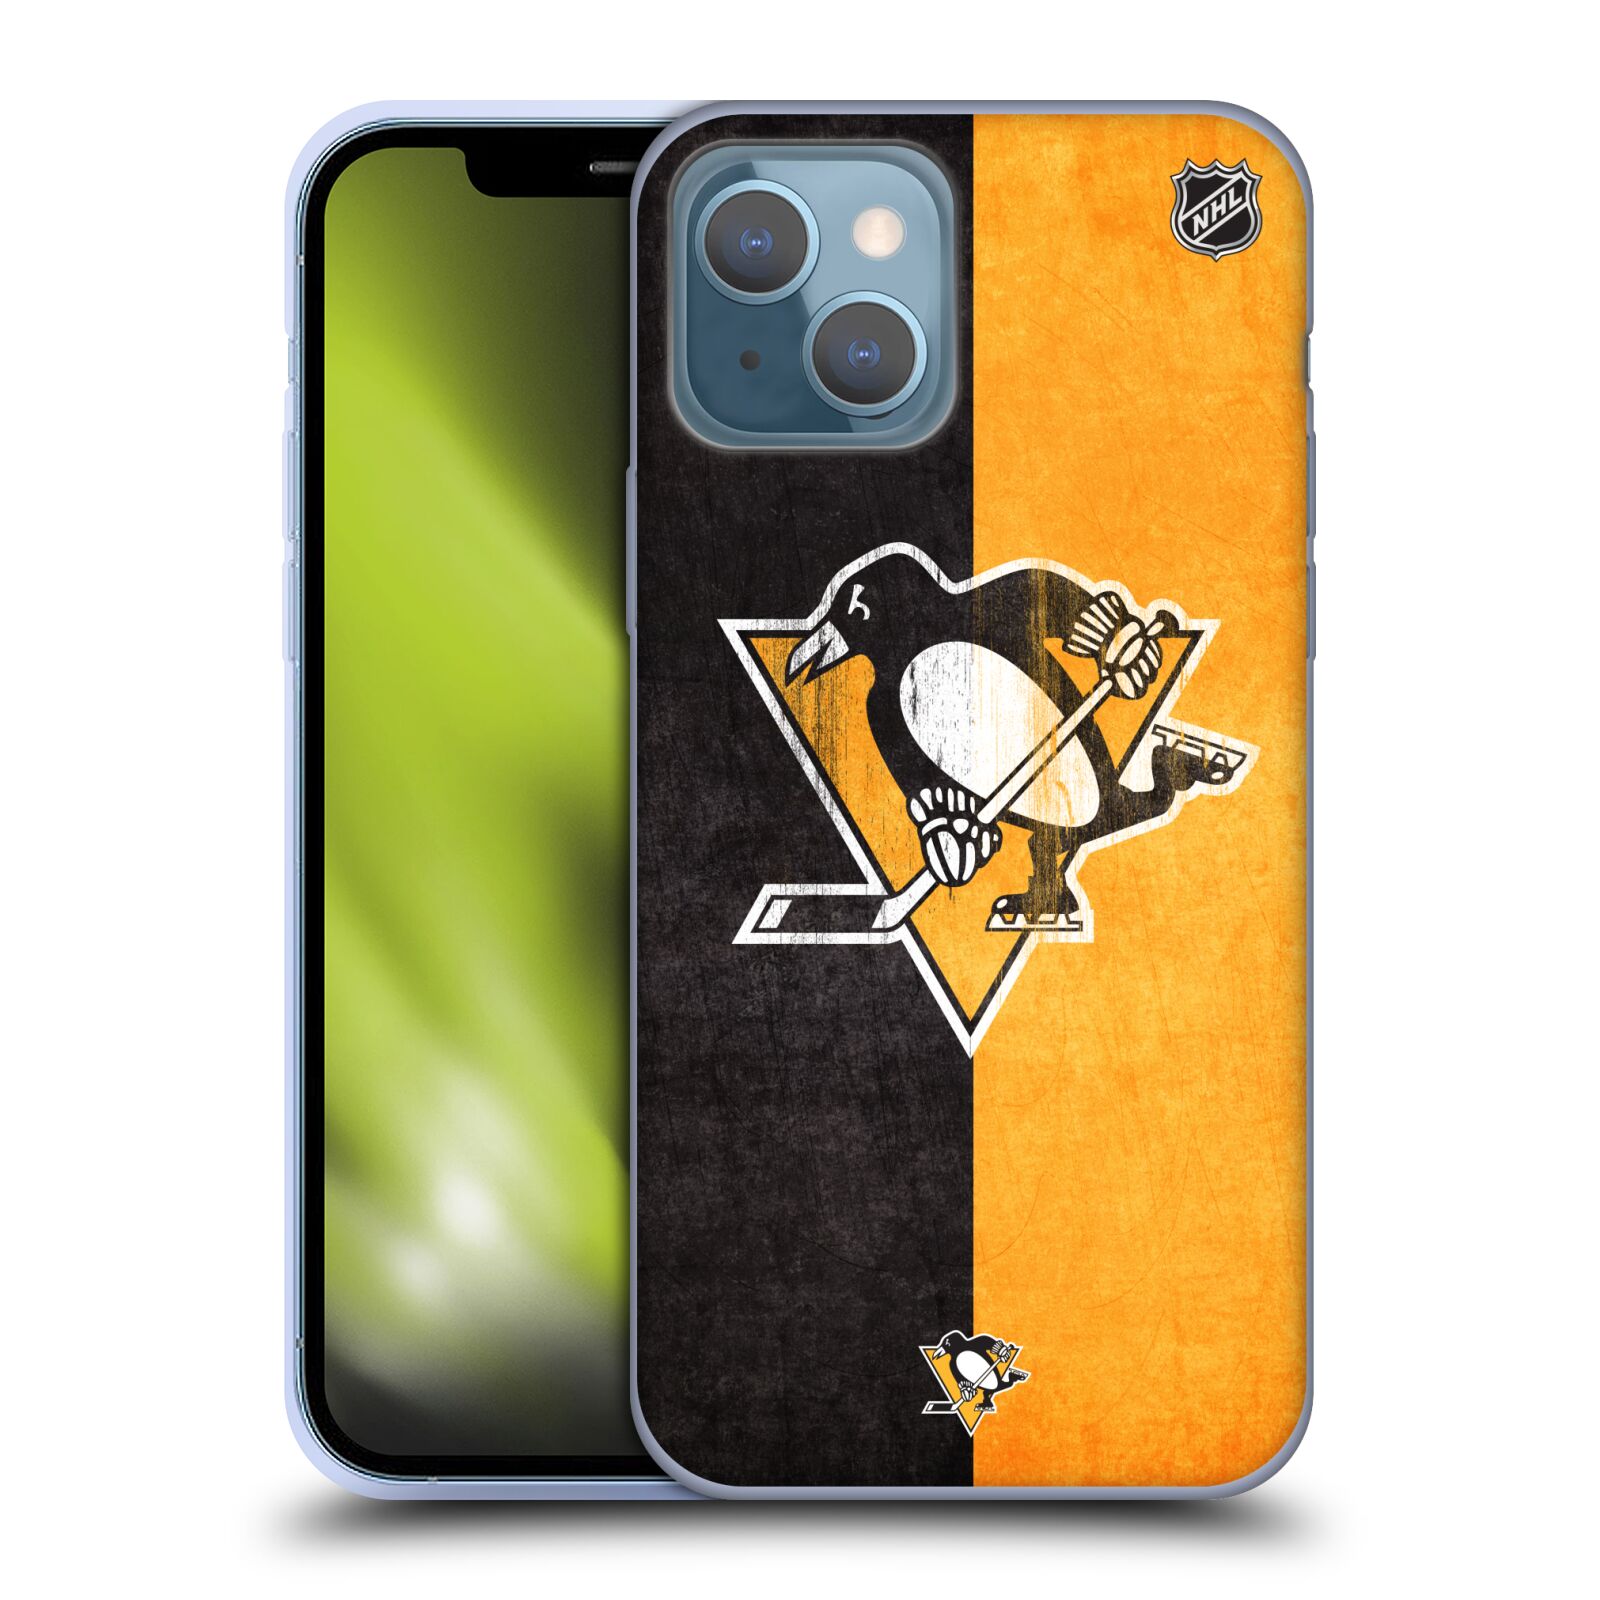 Silikonové pouzdro na mobil Apple iPhone 13 - NHL - Půlené logo Pittsburgh Penguins (Silikonový kryt, obal, pouzdro na mobilní telefon Apple iPhone 13 s licencovaným motivem NHL - Půlené logo Pittsburgh Penguins)